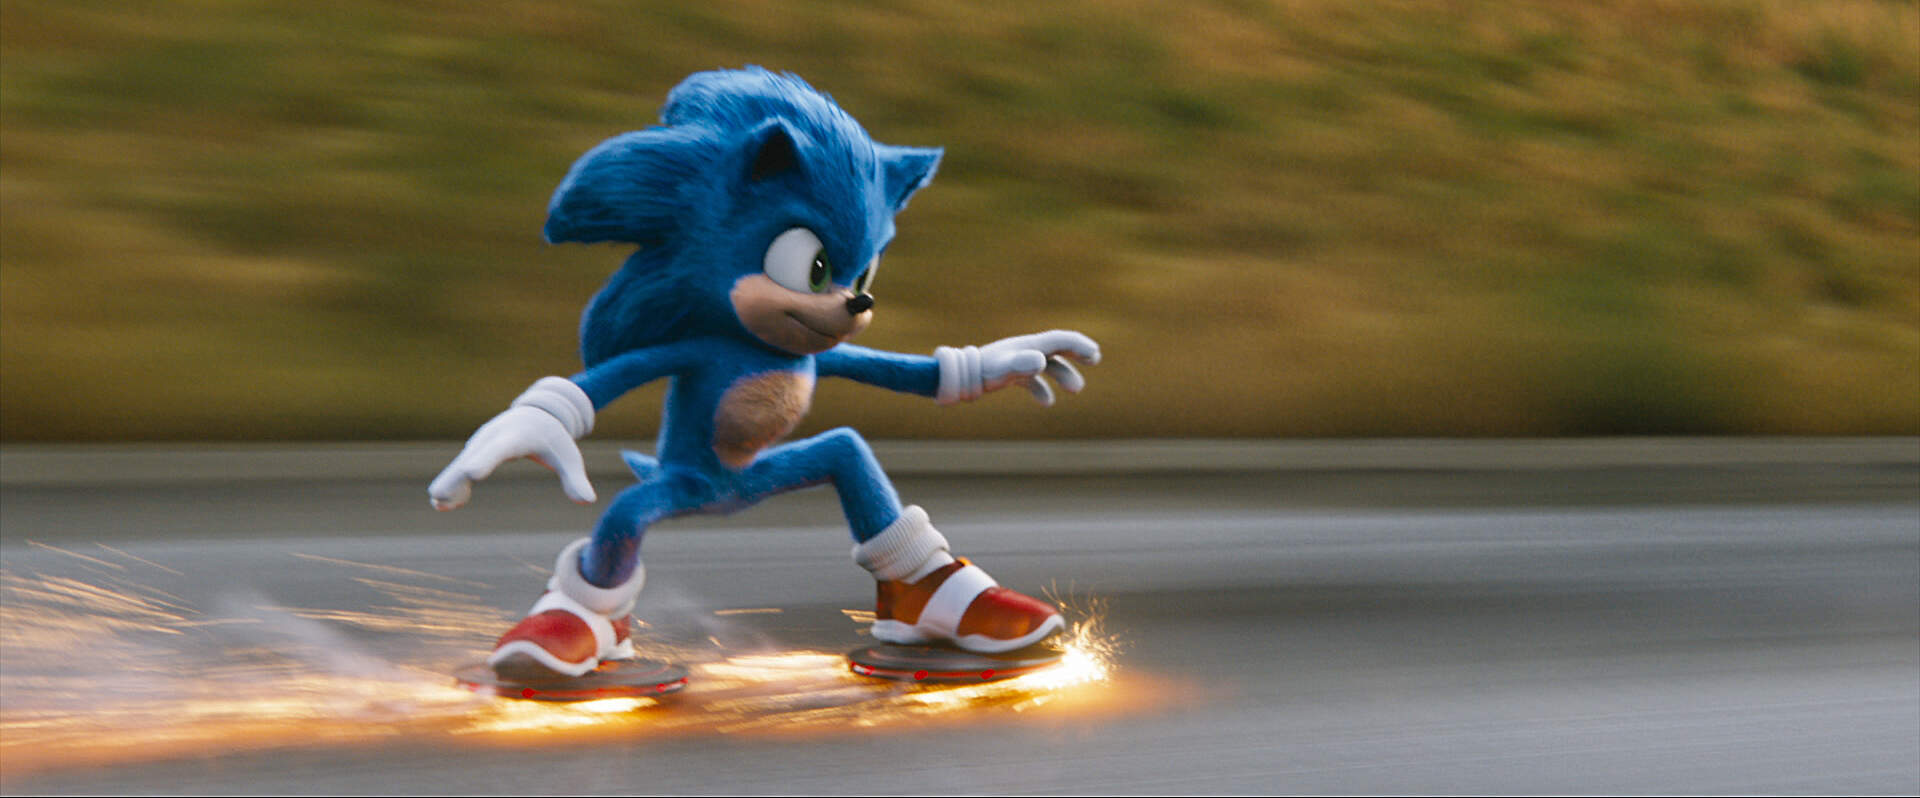 Sonic the Hedgehog - Szenenbild 1 von 5